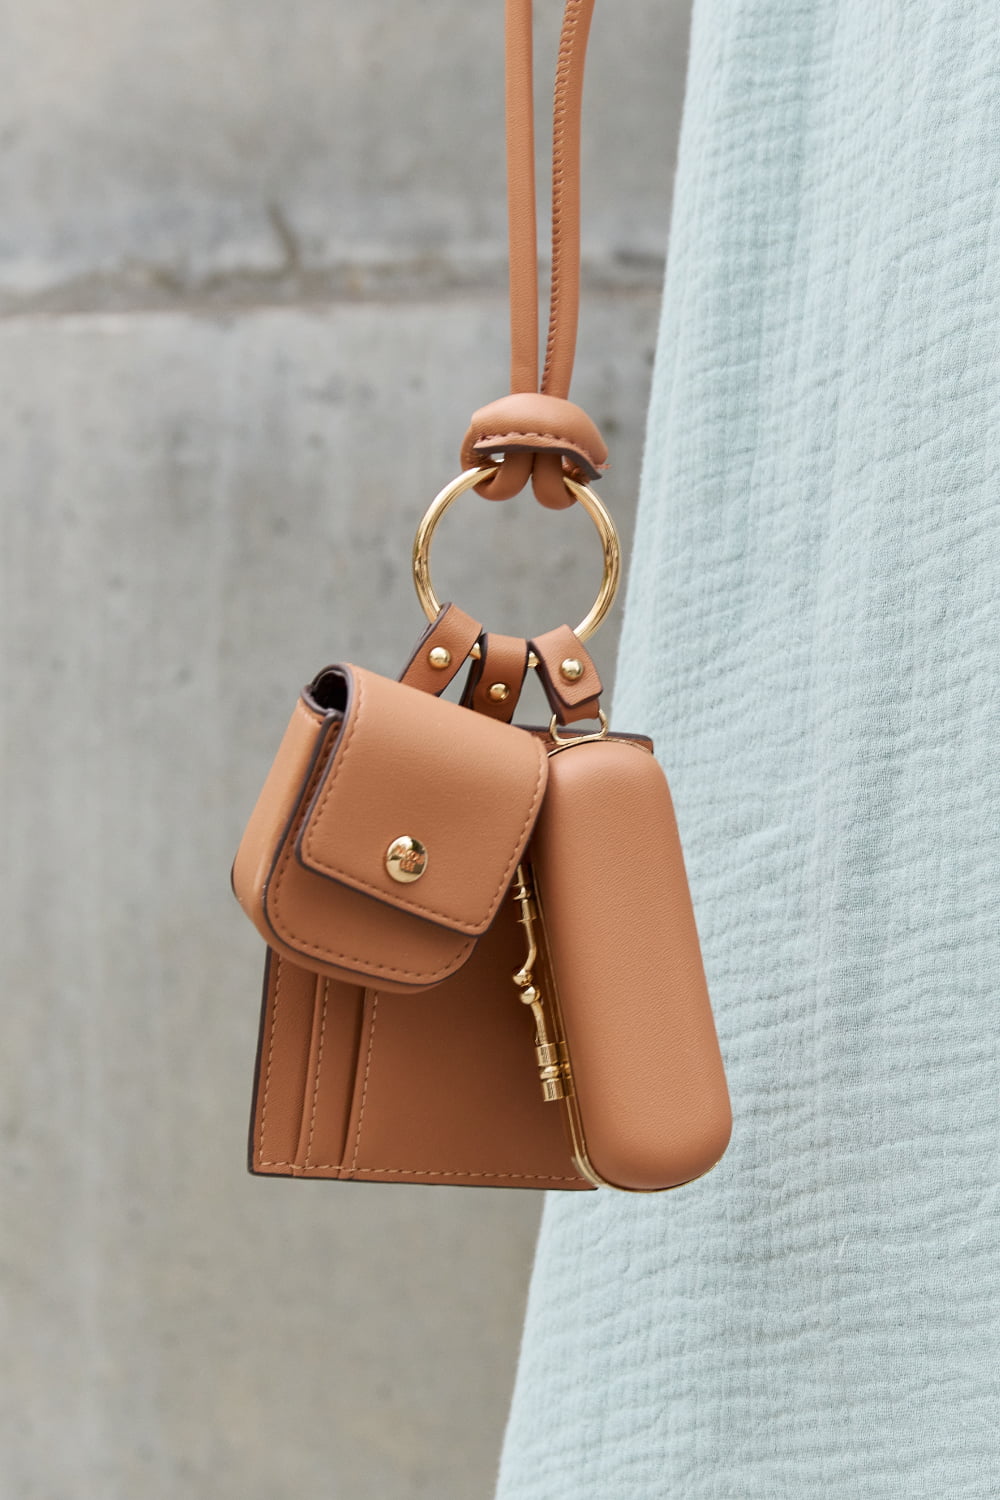 Leather Goods Brand Delvaux Introduces a Denim Handbag Collection